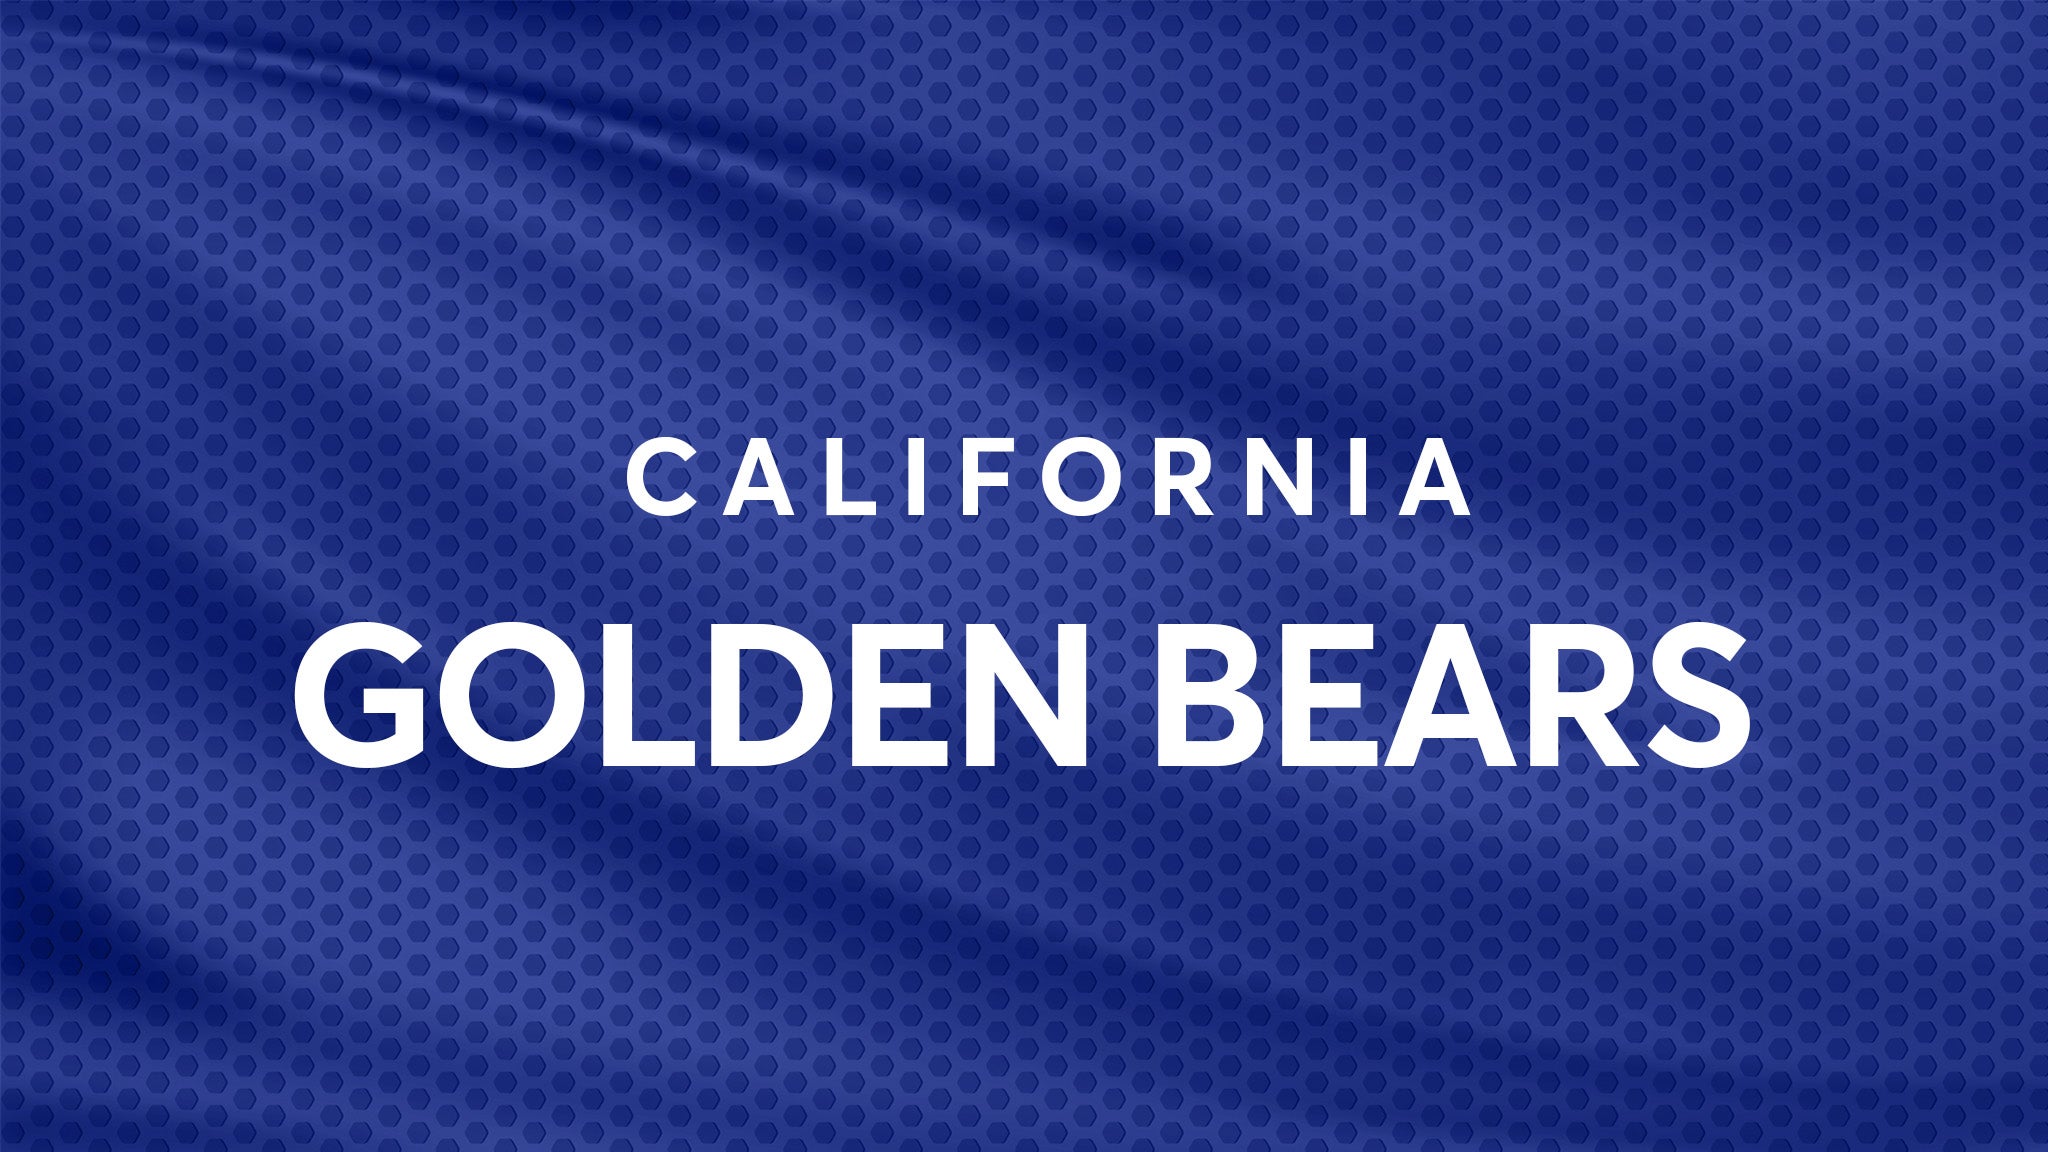 California Golden Bears Football vs. Syracuse University Football hero